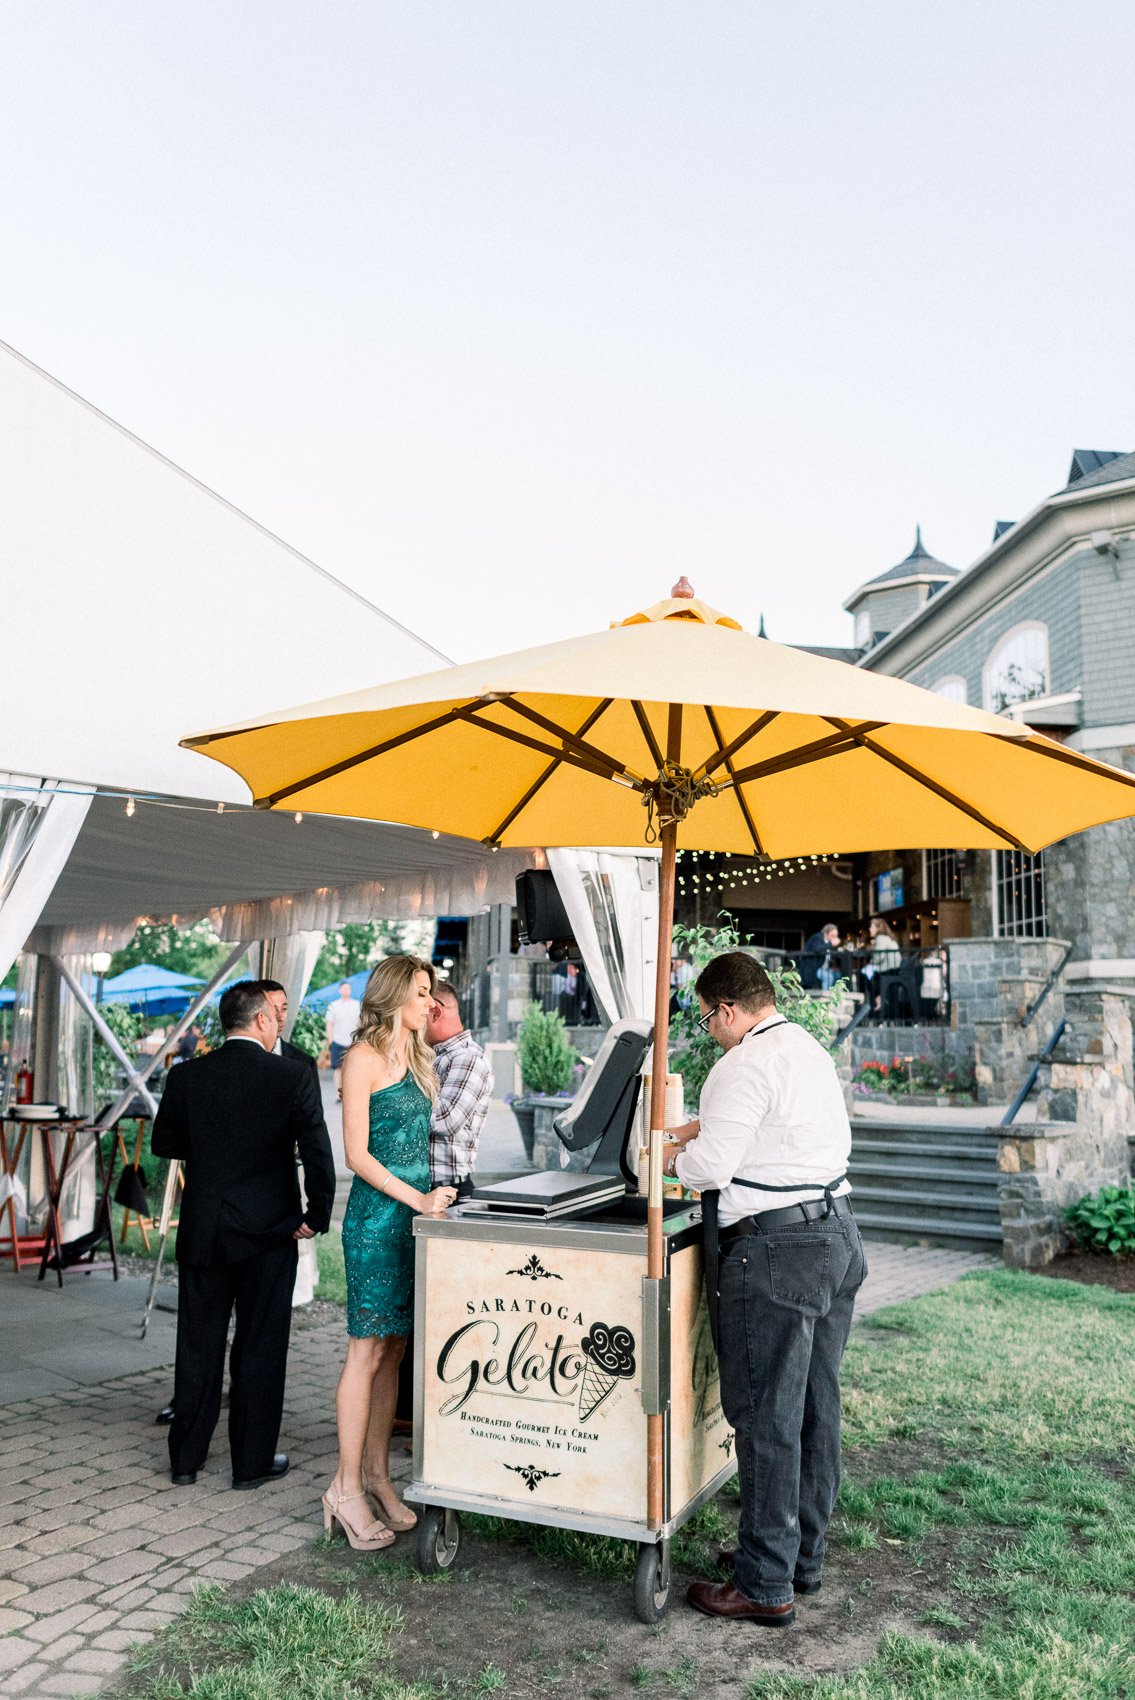 Saratoga gelato at wedding reception in upstate NY